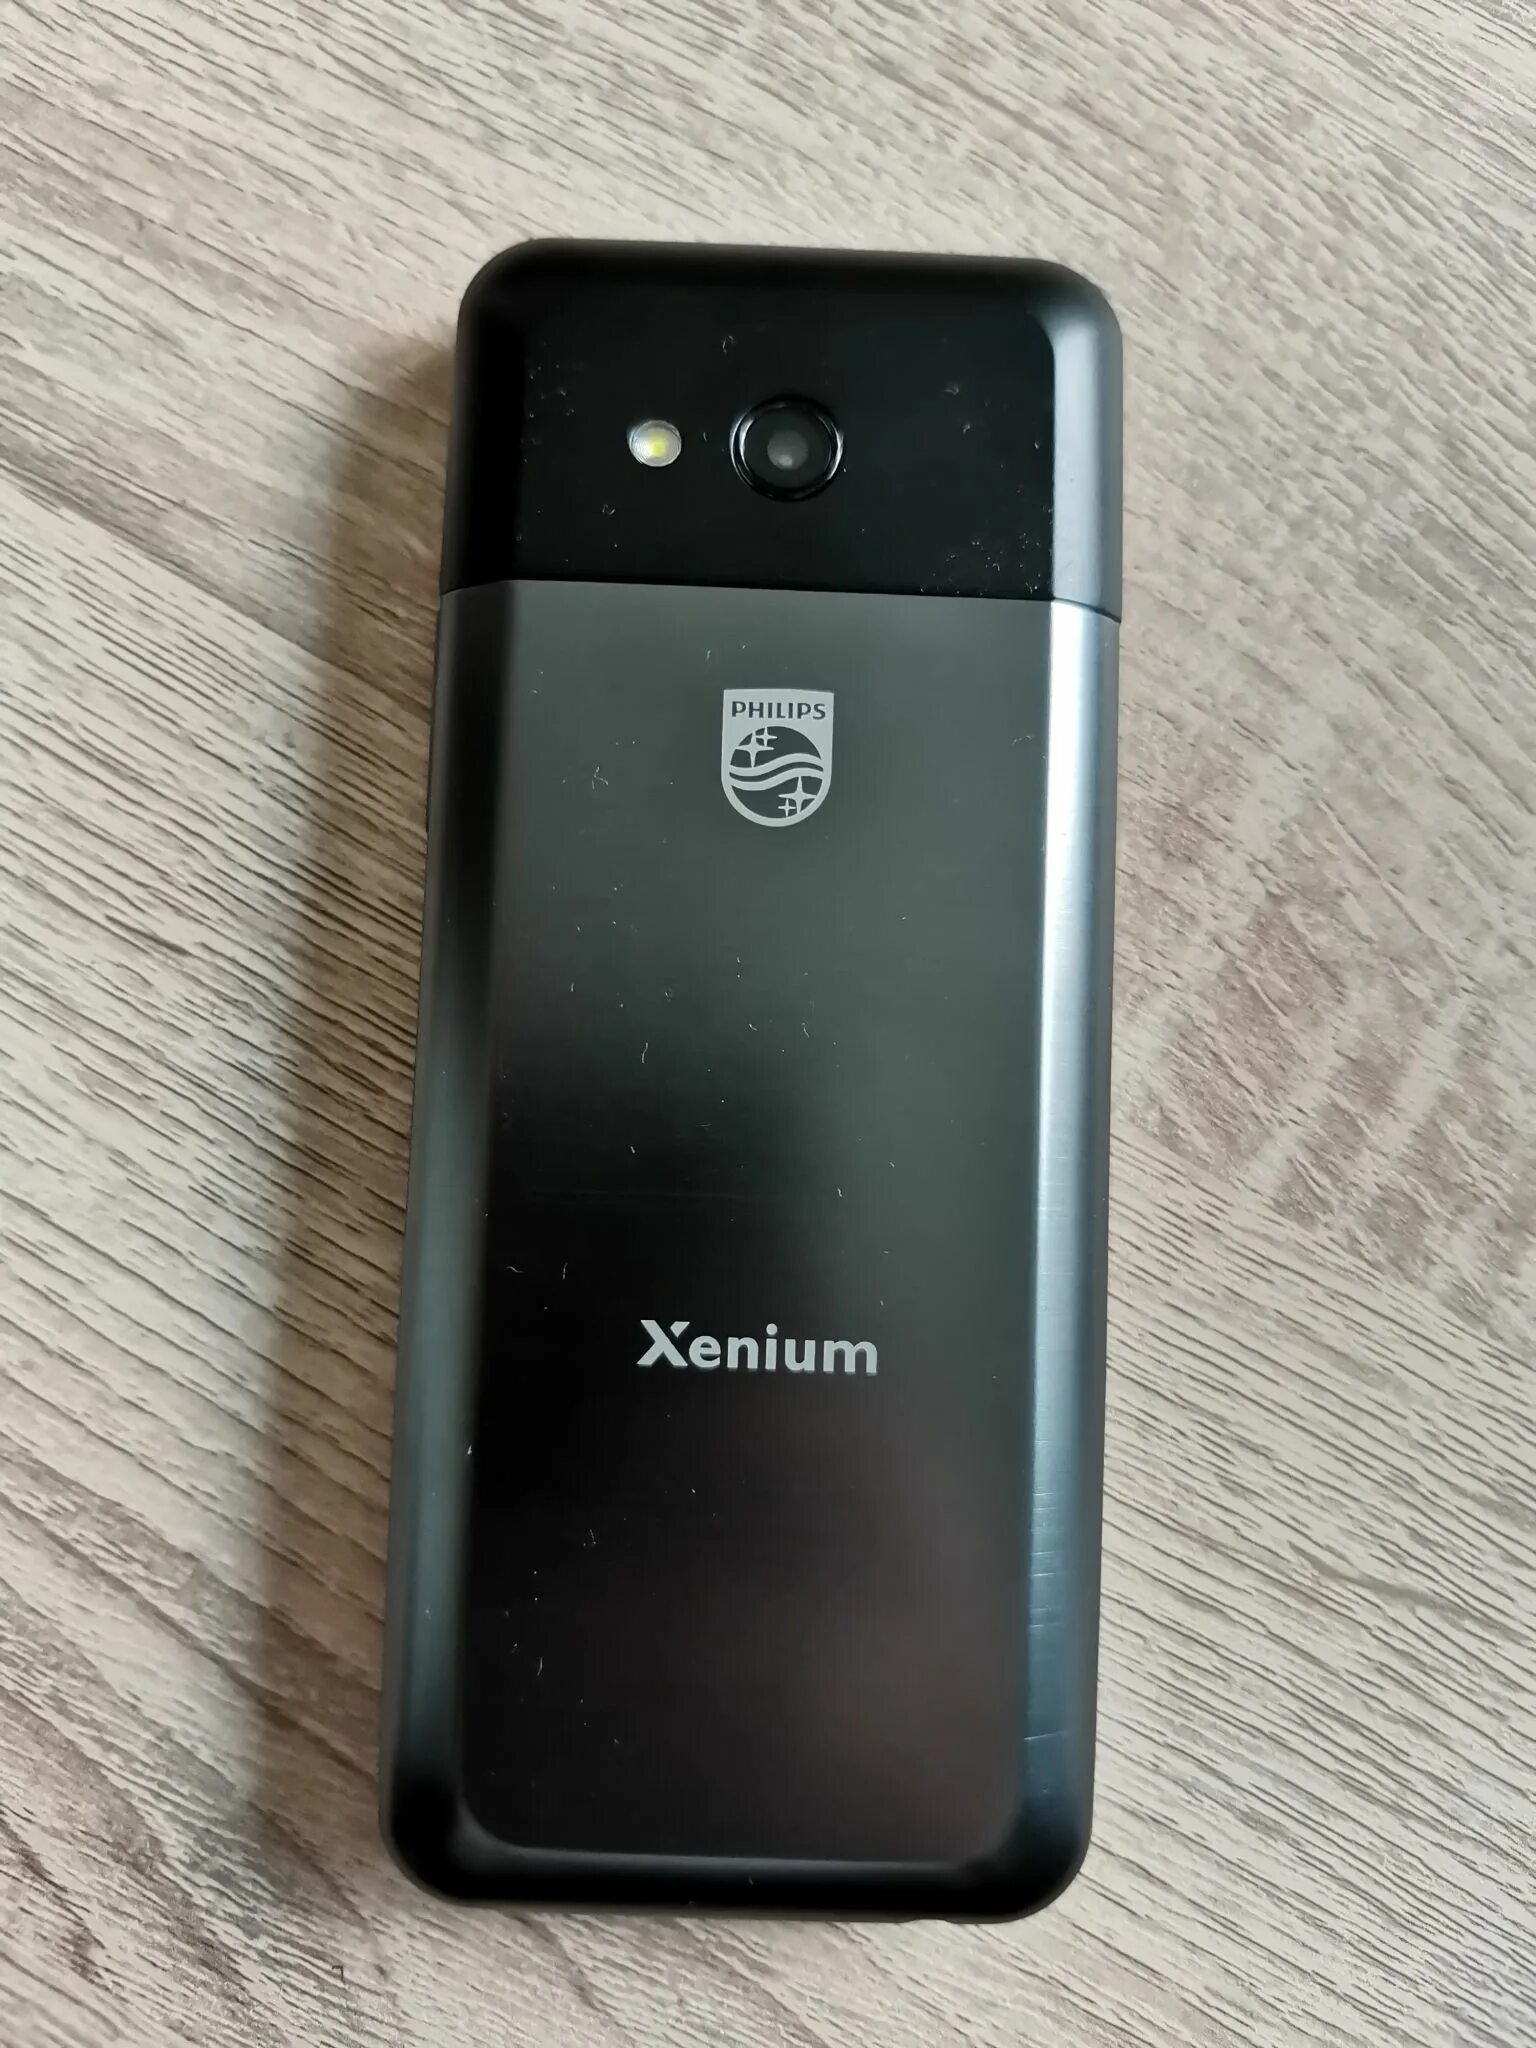 Philips Xenium e590. Мобильный телефон Philips Xenium e590 Black. Philips Xenium e590 Black (черный). Мобильный телефон Philips Xenium e590 Black размер. Филипс 590 телефон